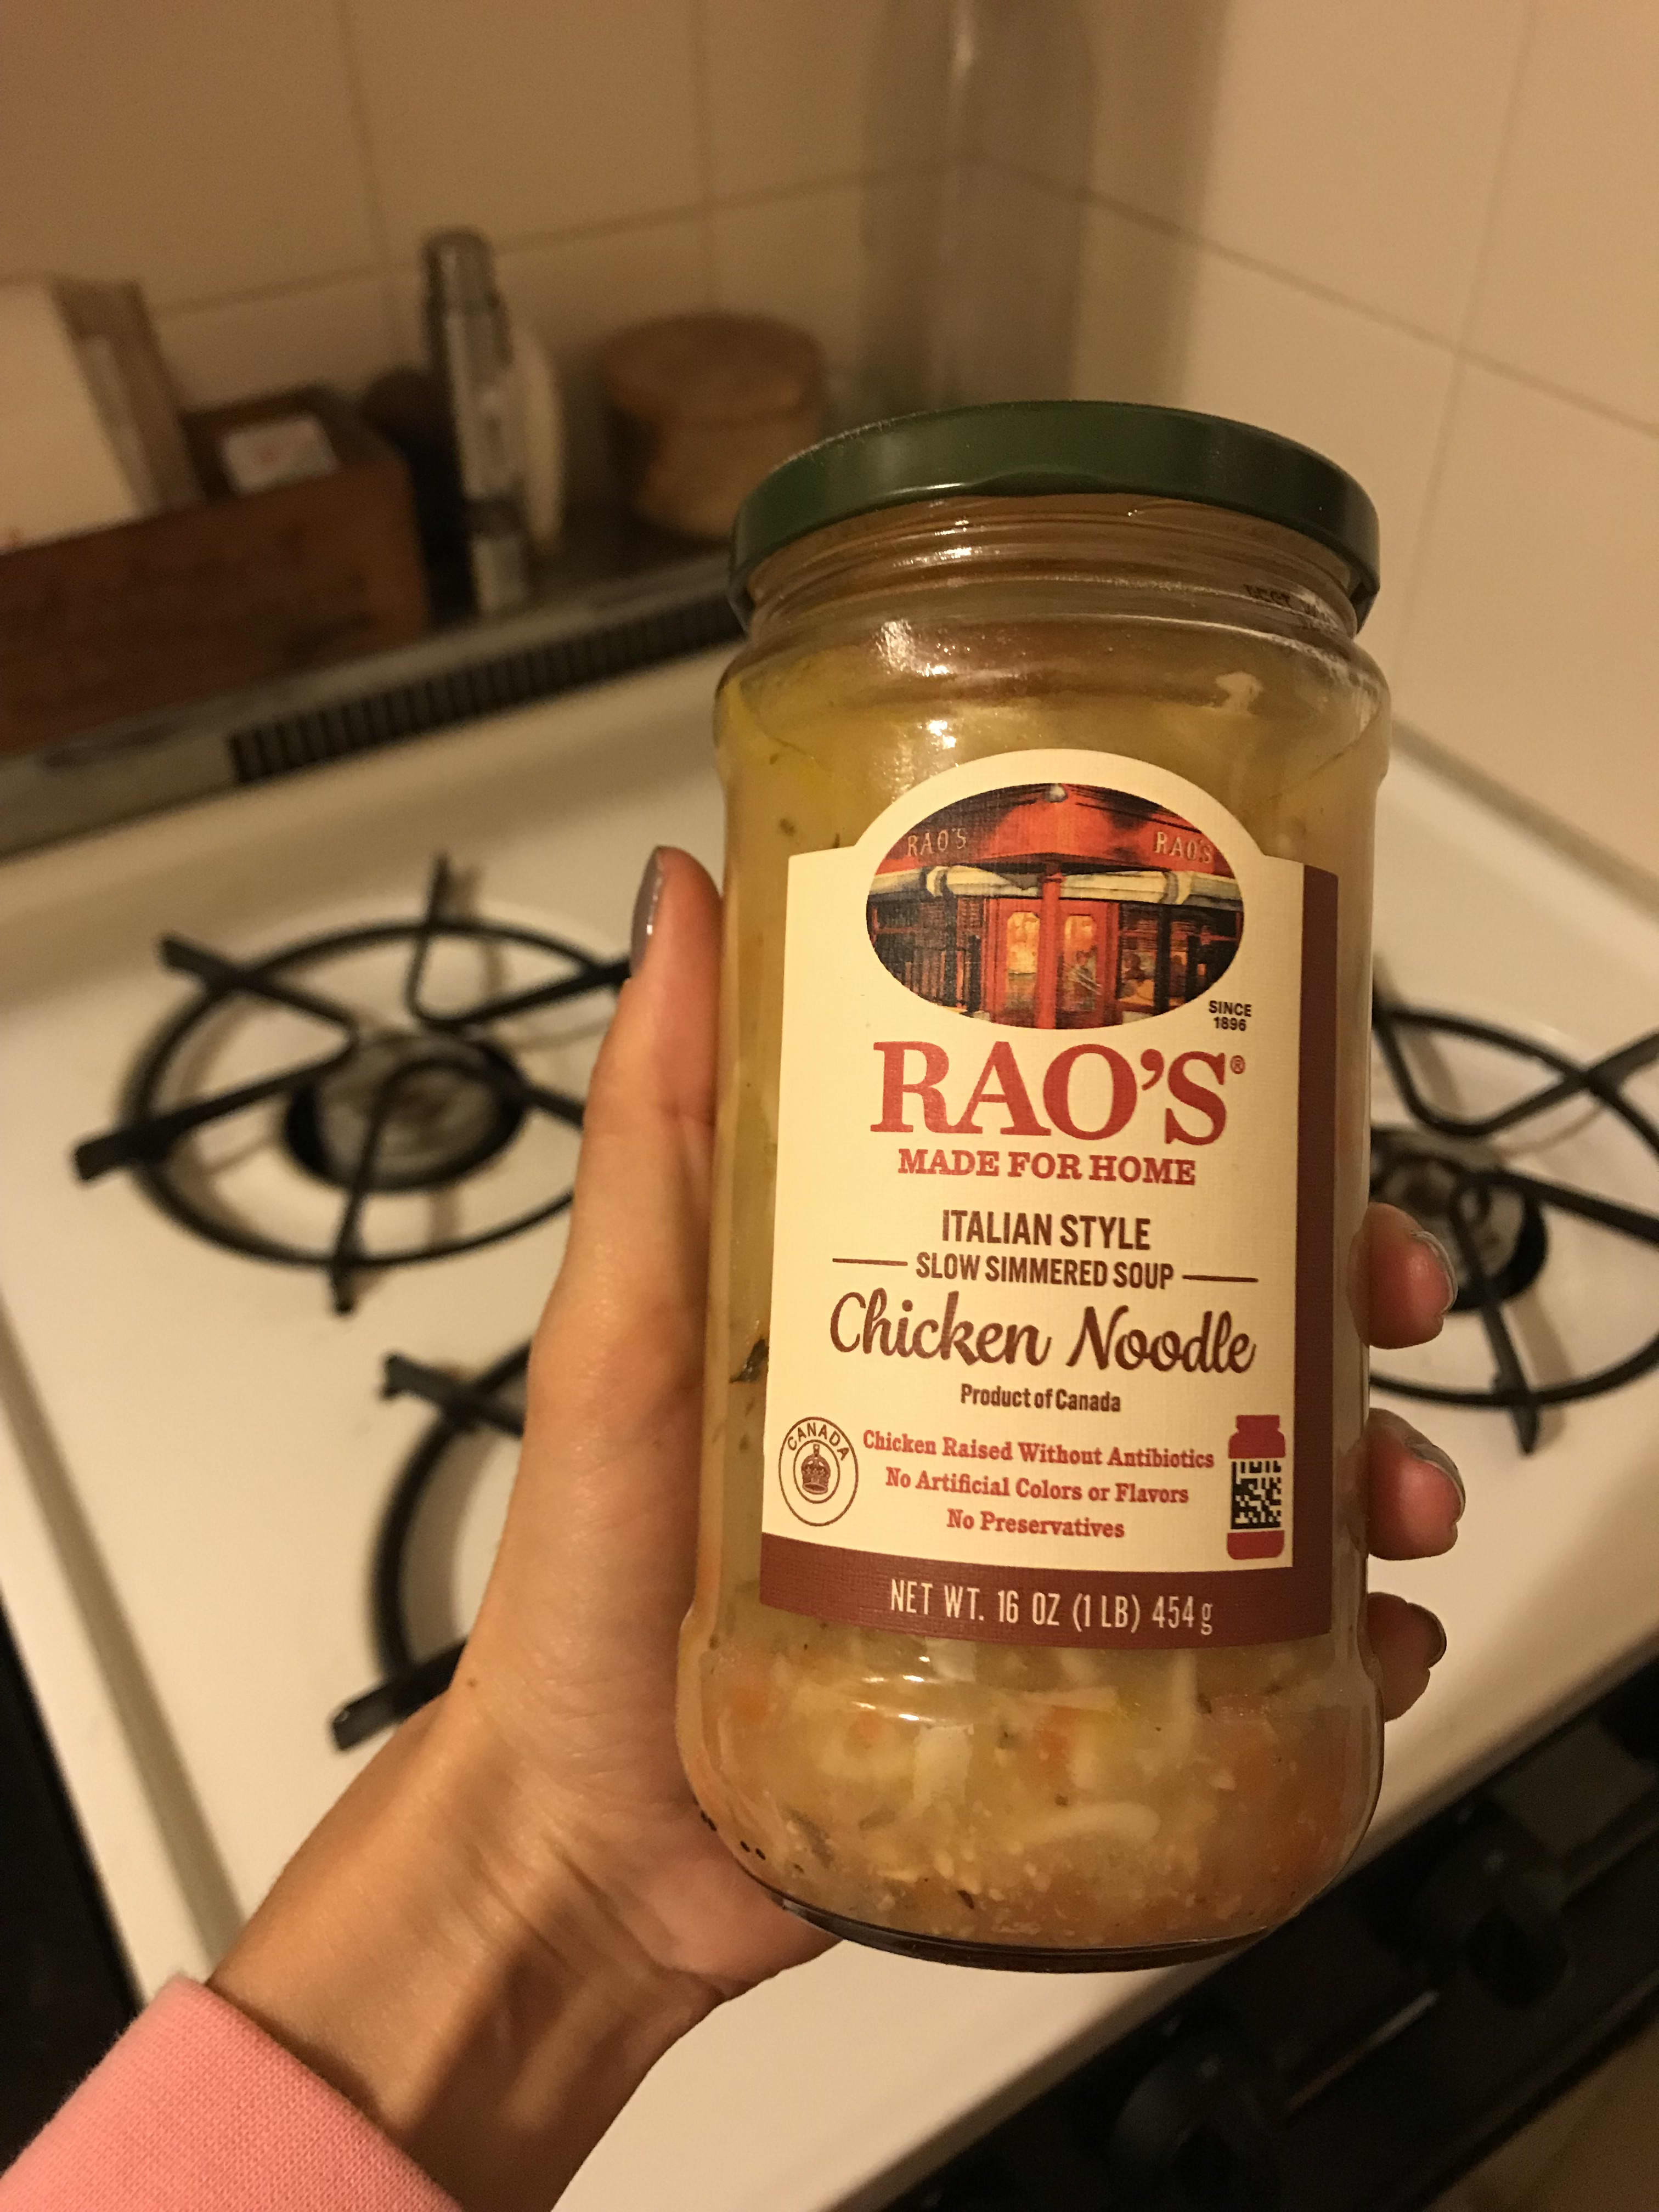 Rao's Homemade Soups Variety Pack of 6 Flavors- Raos Tomato Basil Soup,  Raos Italian Wedding Soup, Raos Chicken Noodle Soup, Raos Pasta Fagioli  Soup